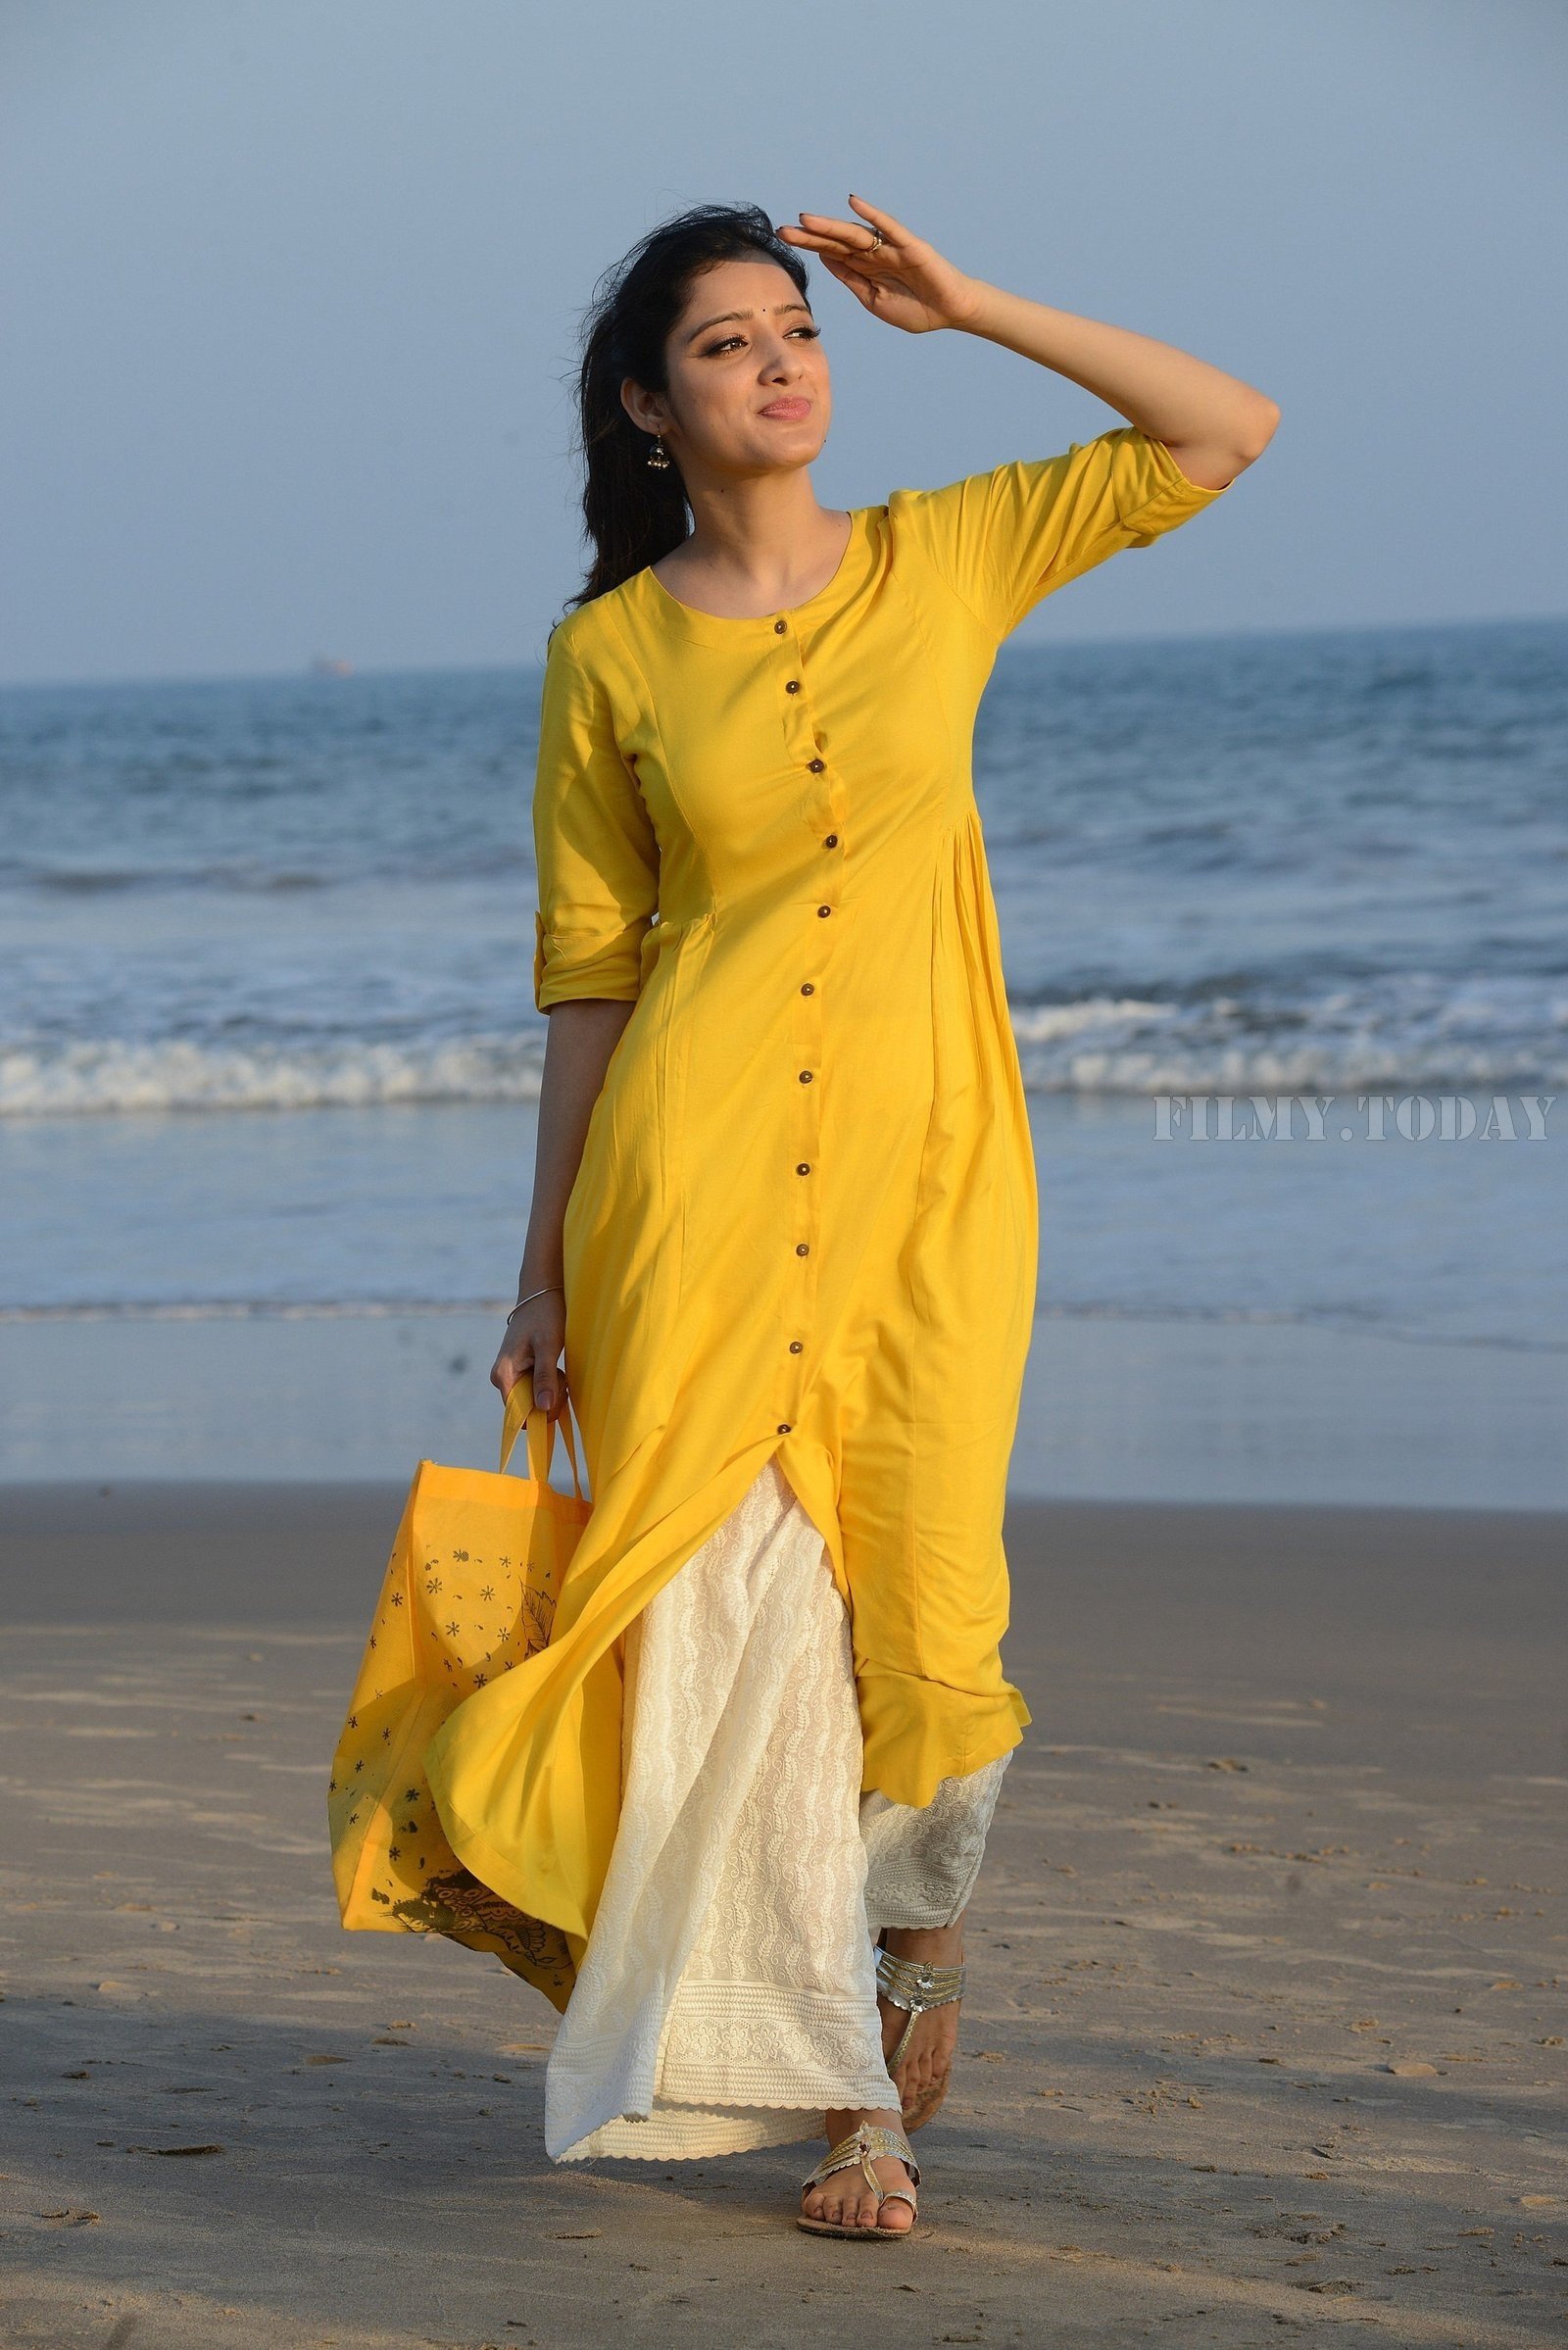 Actress Richa Panai Stills From Brindavanamadi Andaridi | Picture 1572844